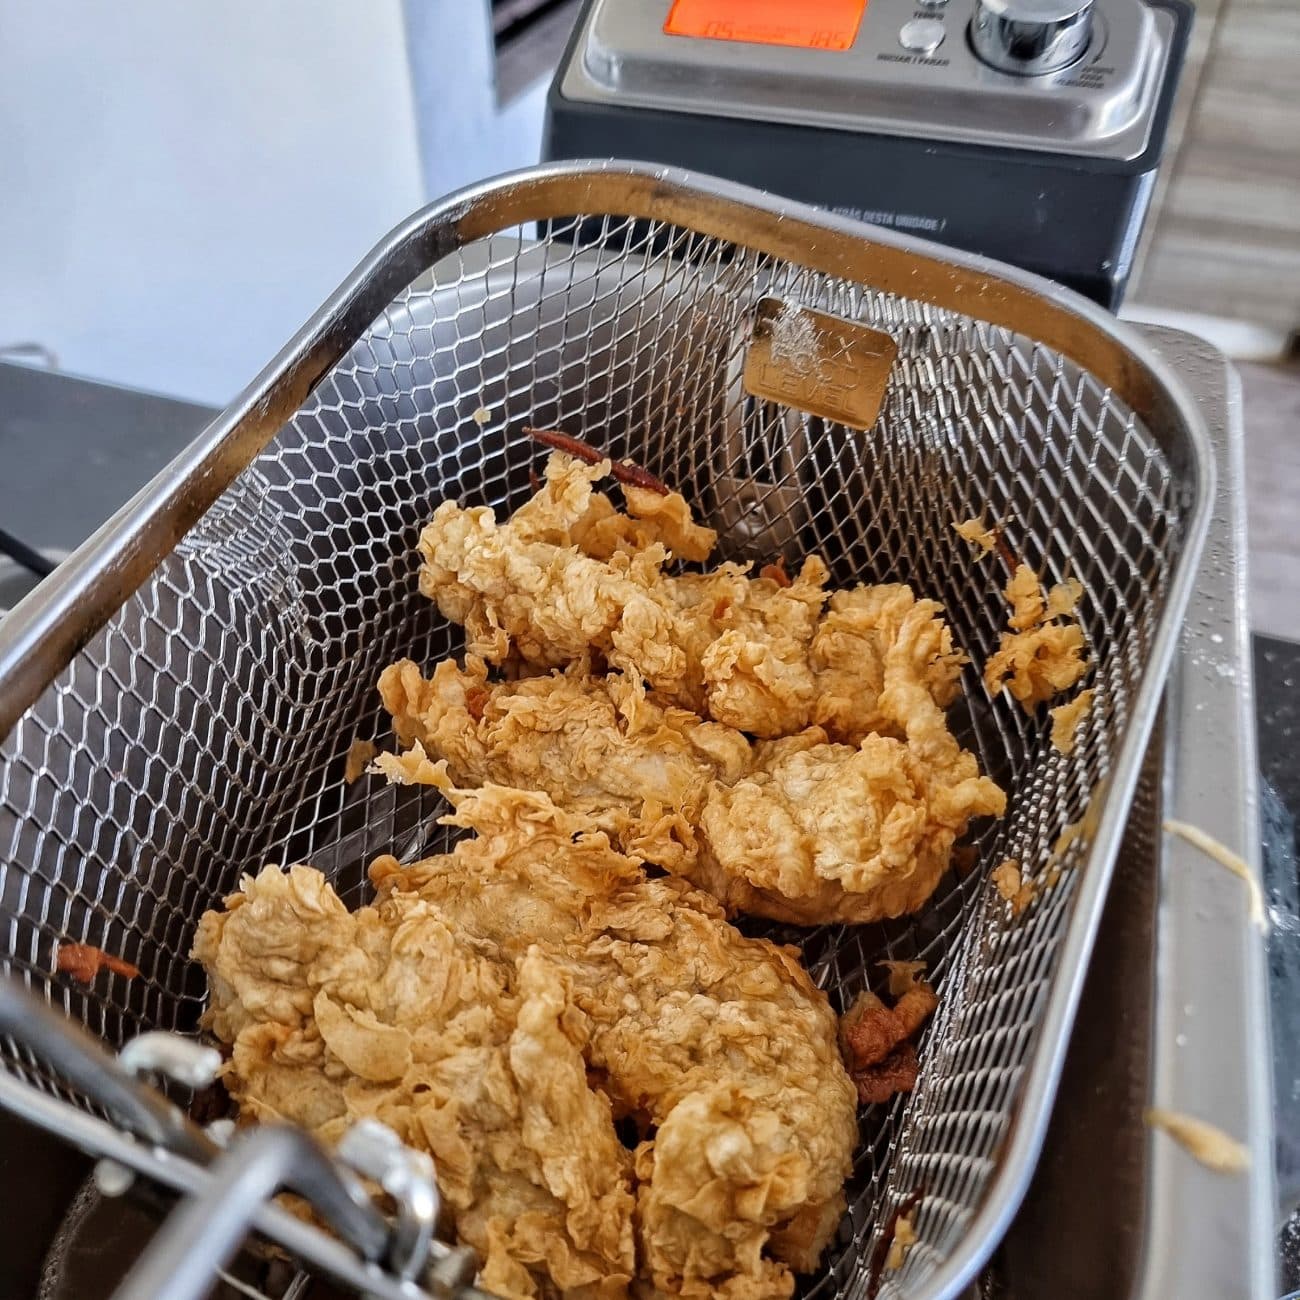 Tiras de frango frito ao estilo KFC